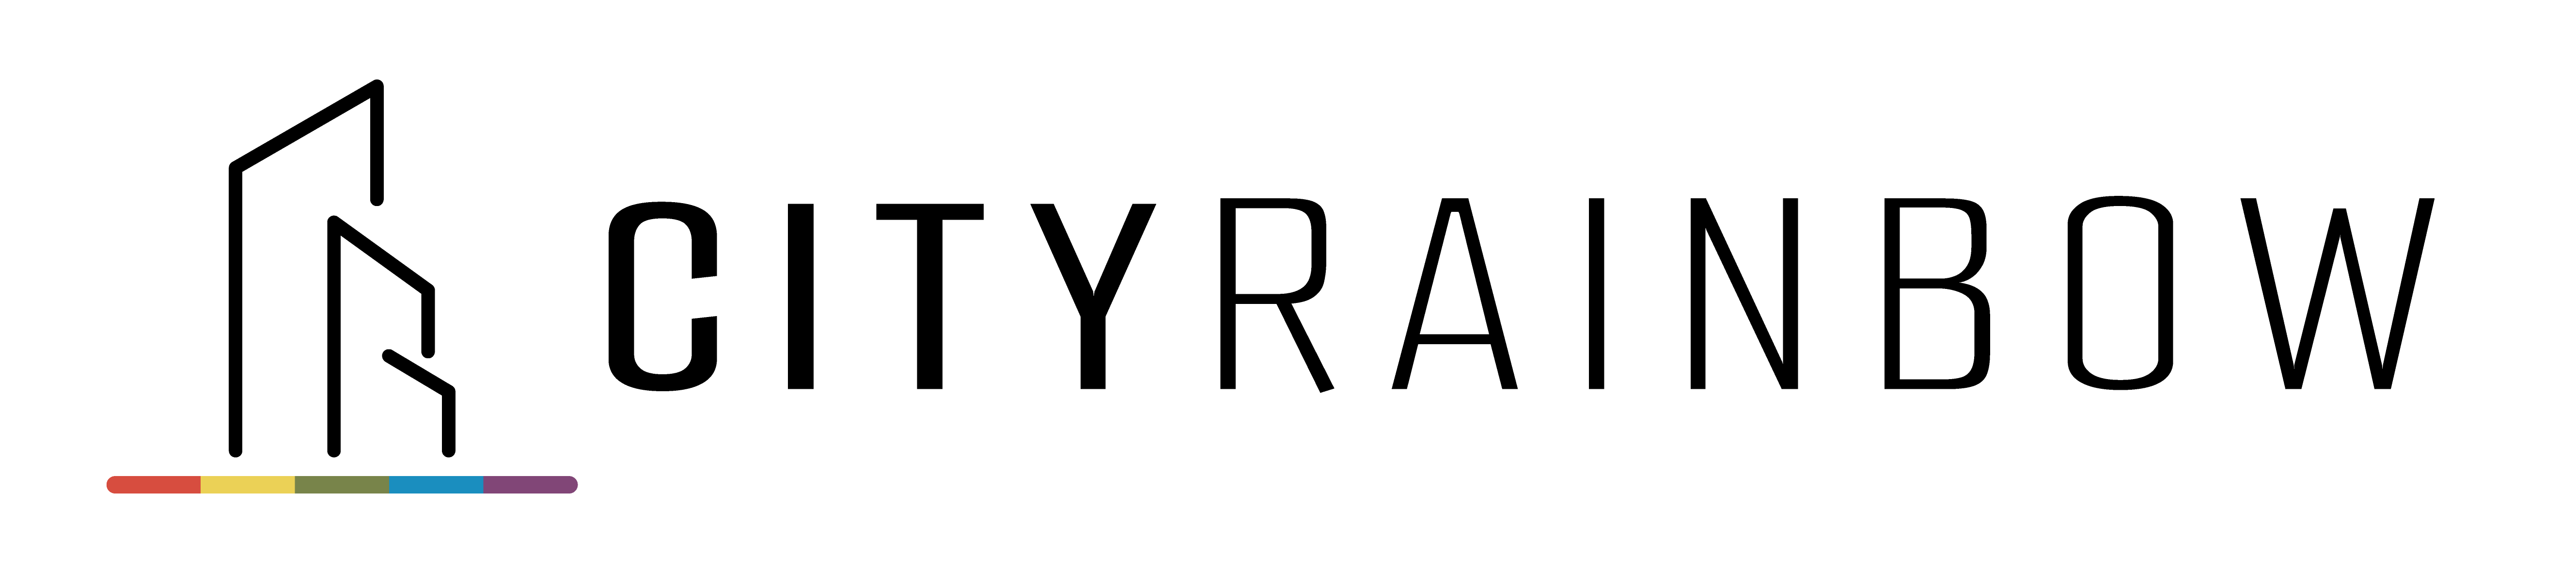 Логотип компании Ситирэинбоу